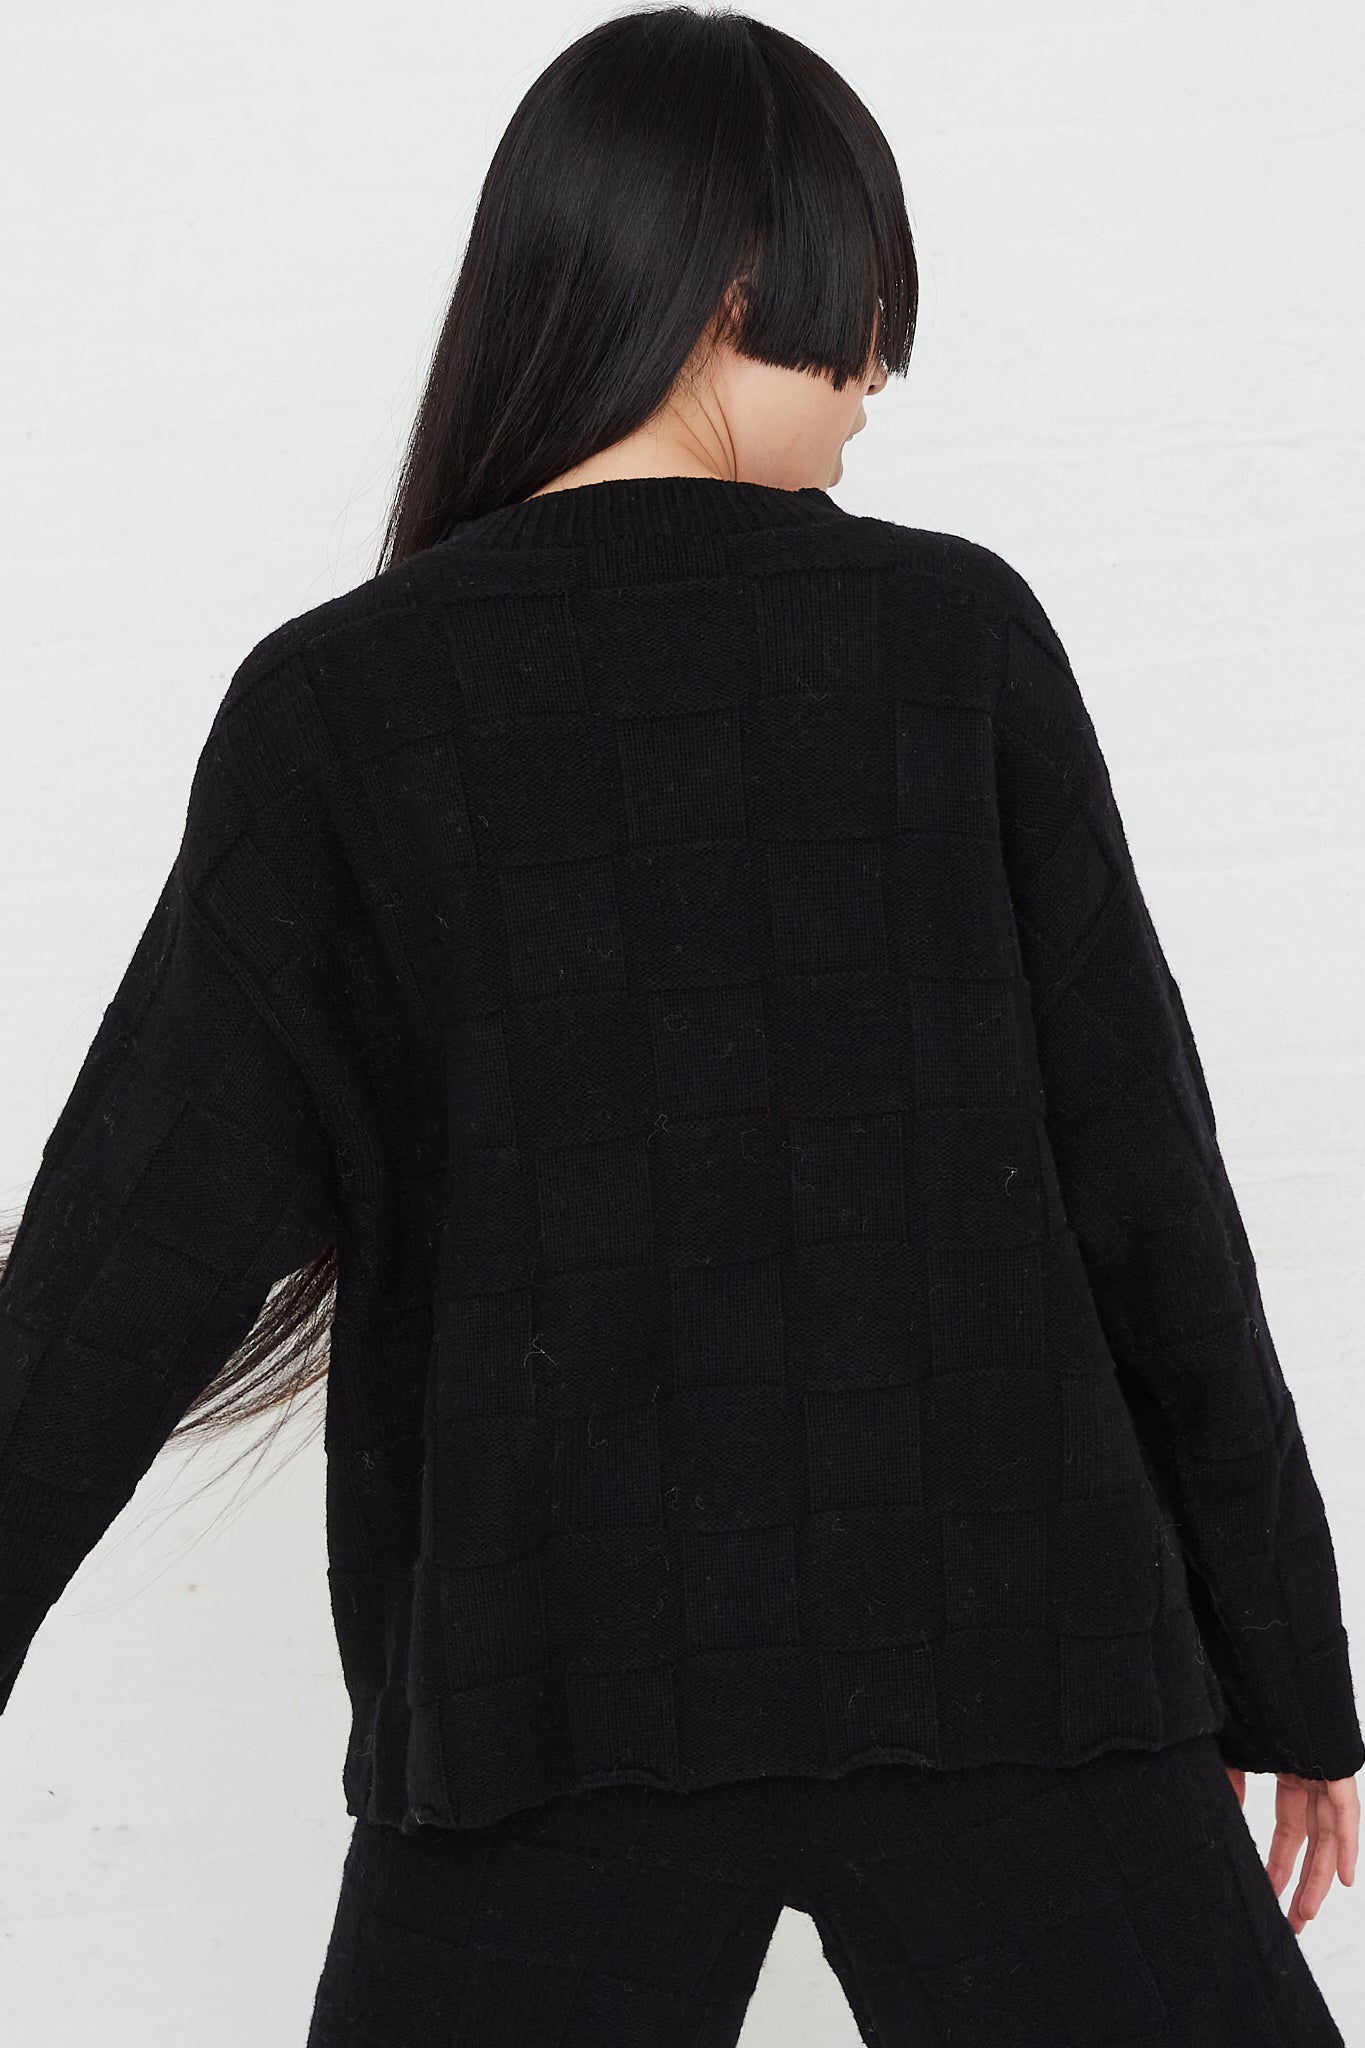 Konak Knit Sweater in Black by Baserange for Oroboro Back